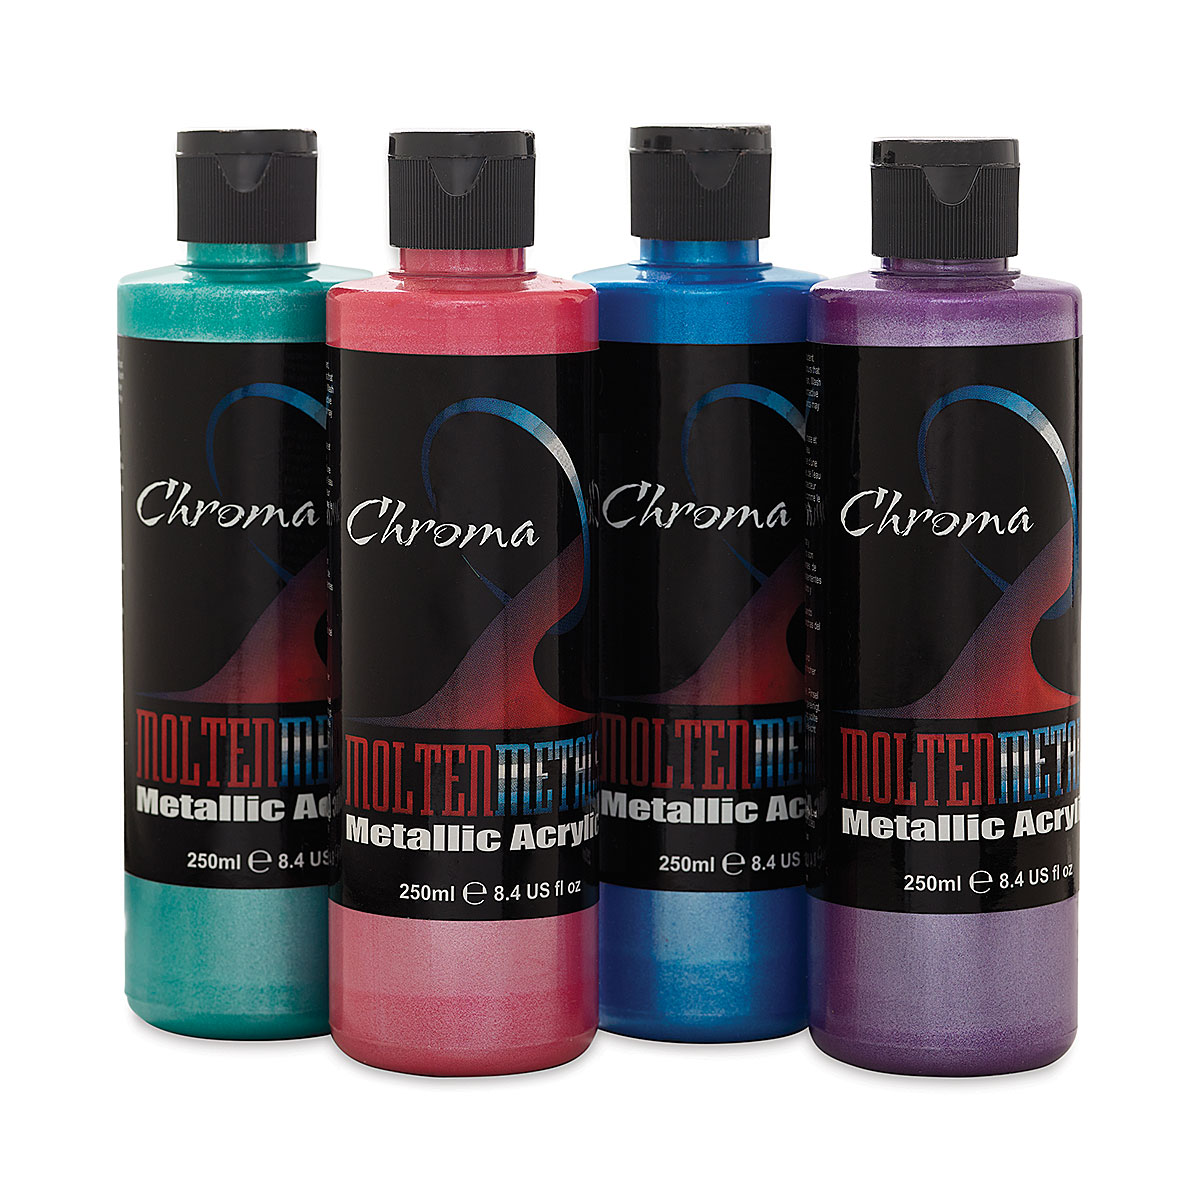 Blickrylic Student Acrylics - Metallic Colors, Set of 6, 2 oz Bottles